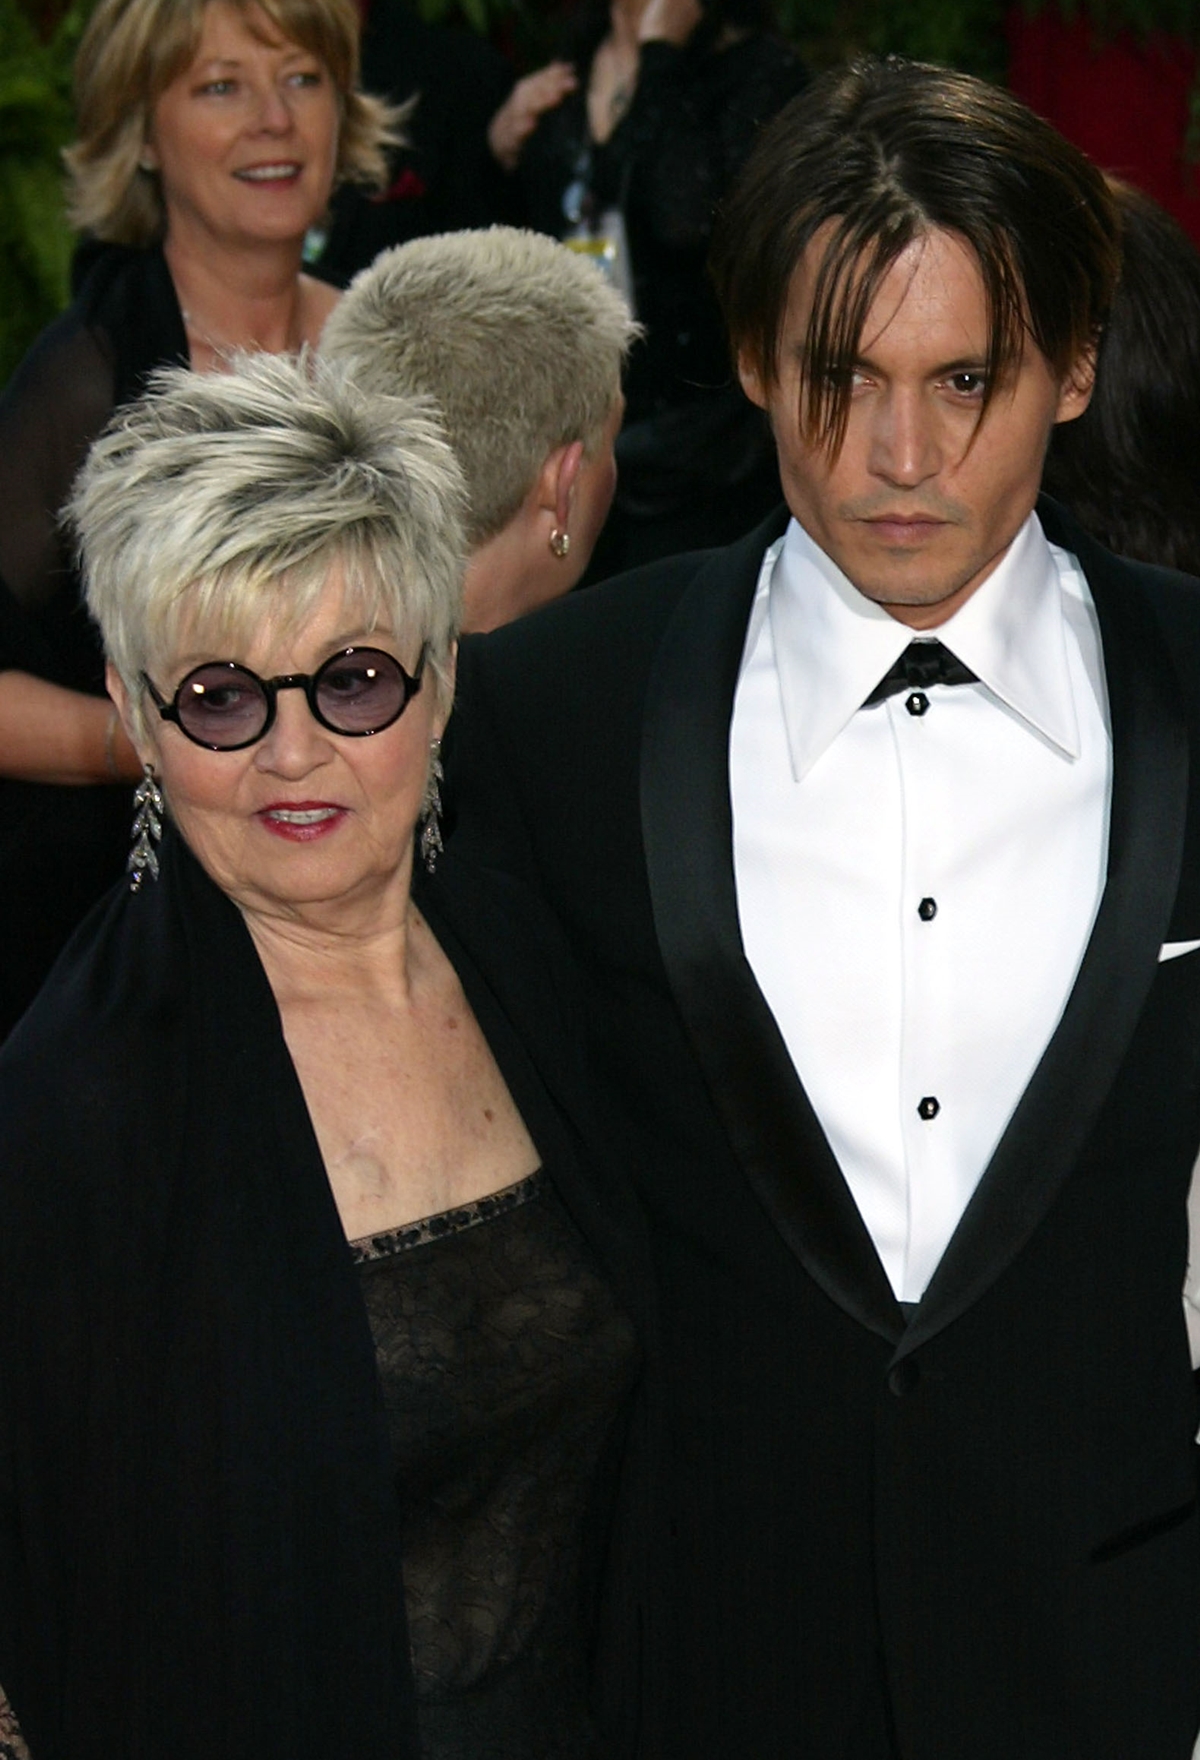 Johnny Depp and his sister Christi Dembrowski claim their mom Betty Sue Palmer was abusive